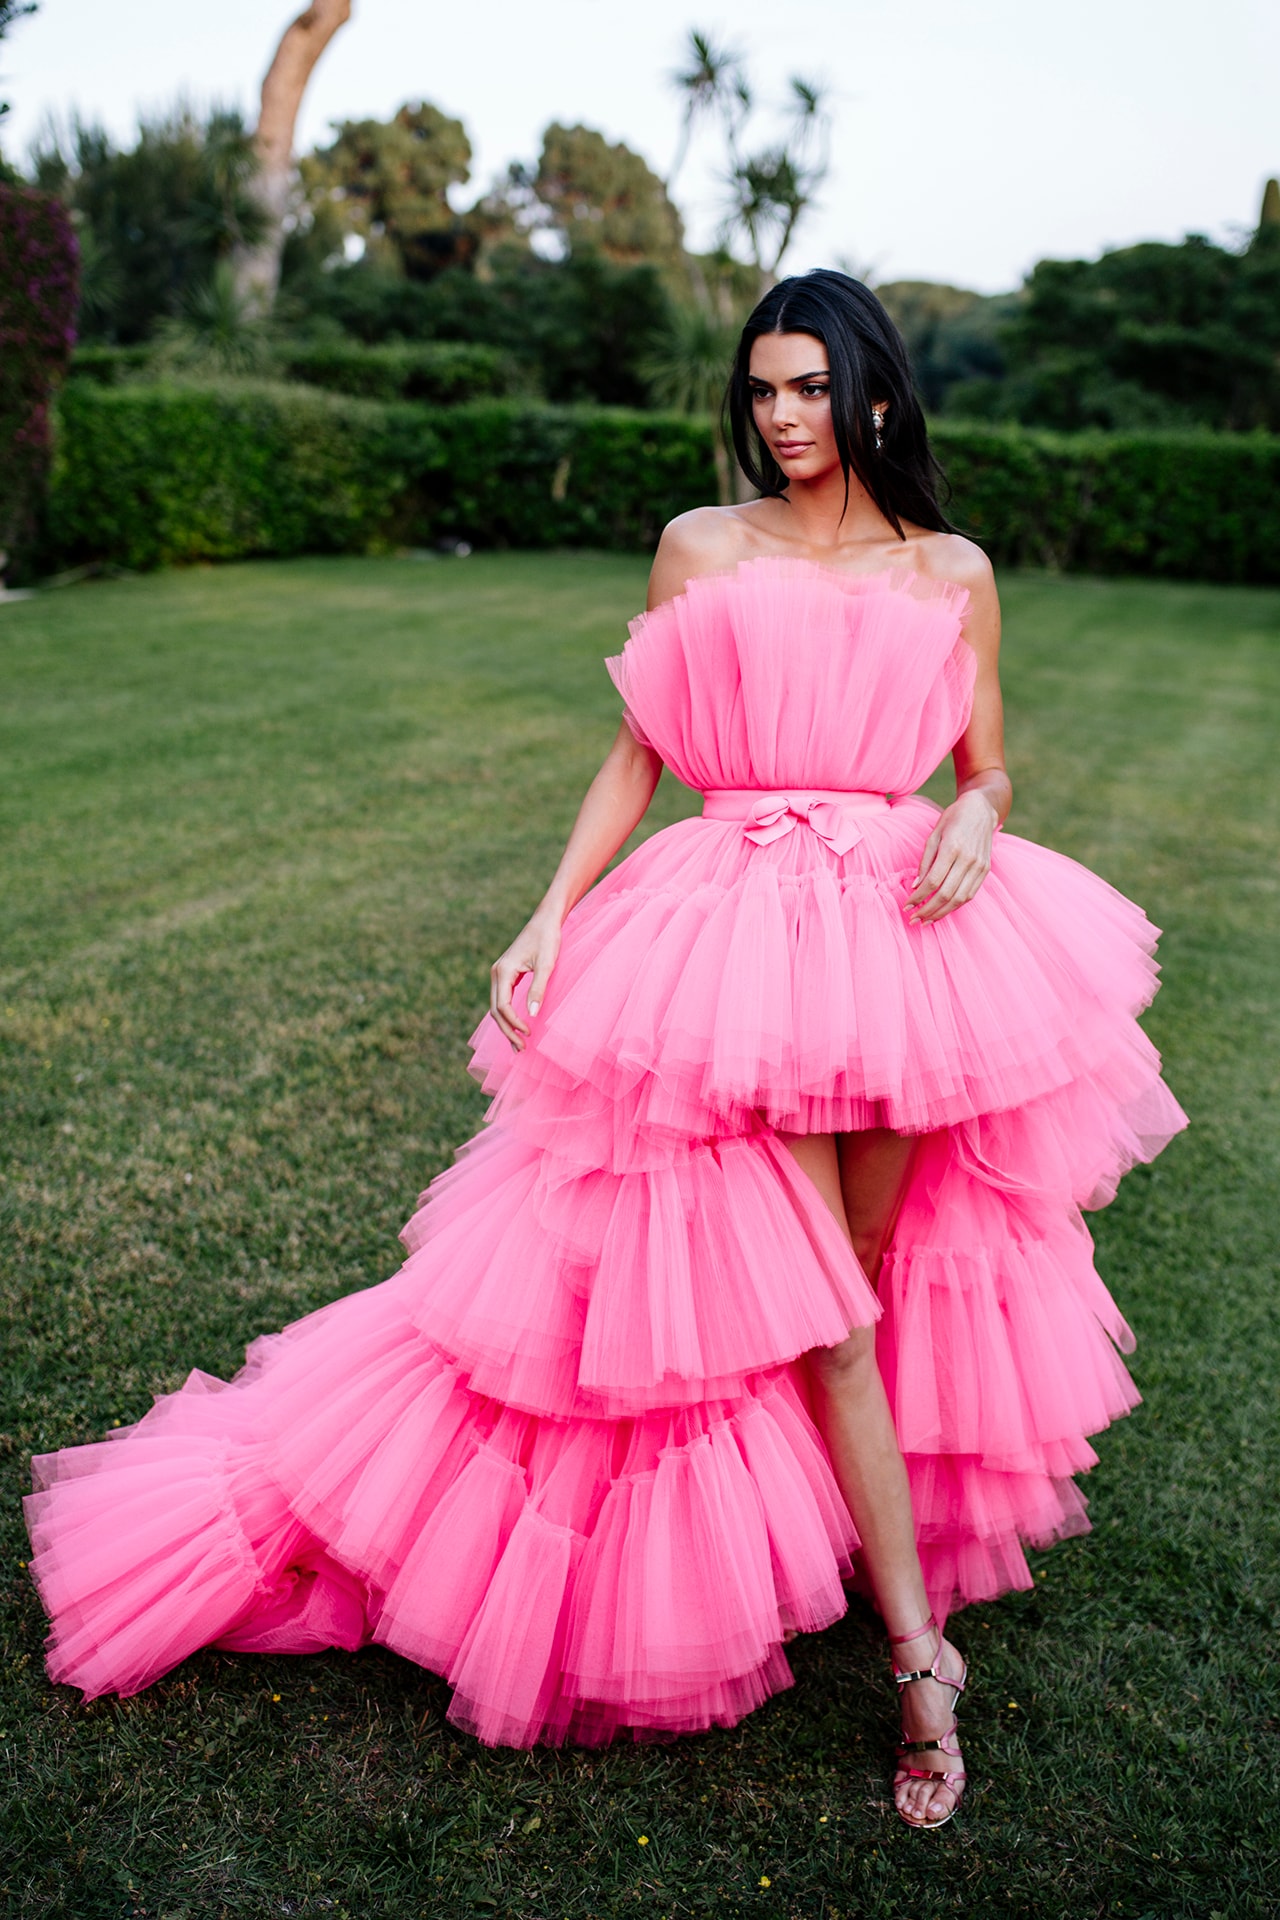 Kendall Jenner amfAR Cannes Gala 2019 giambattista valli H&M Pink tulle dress gown